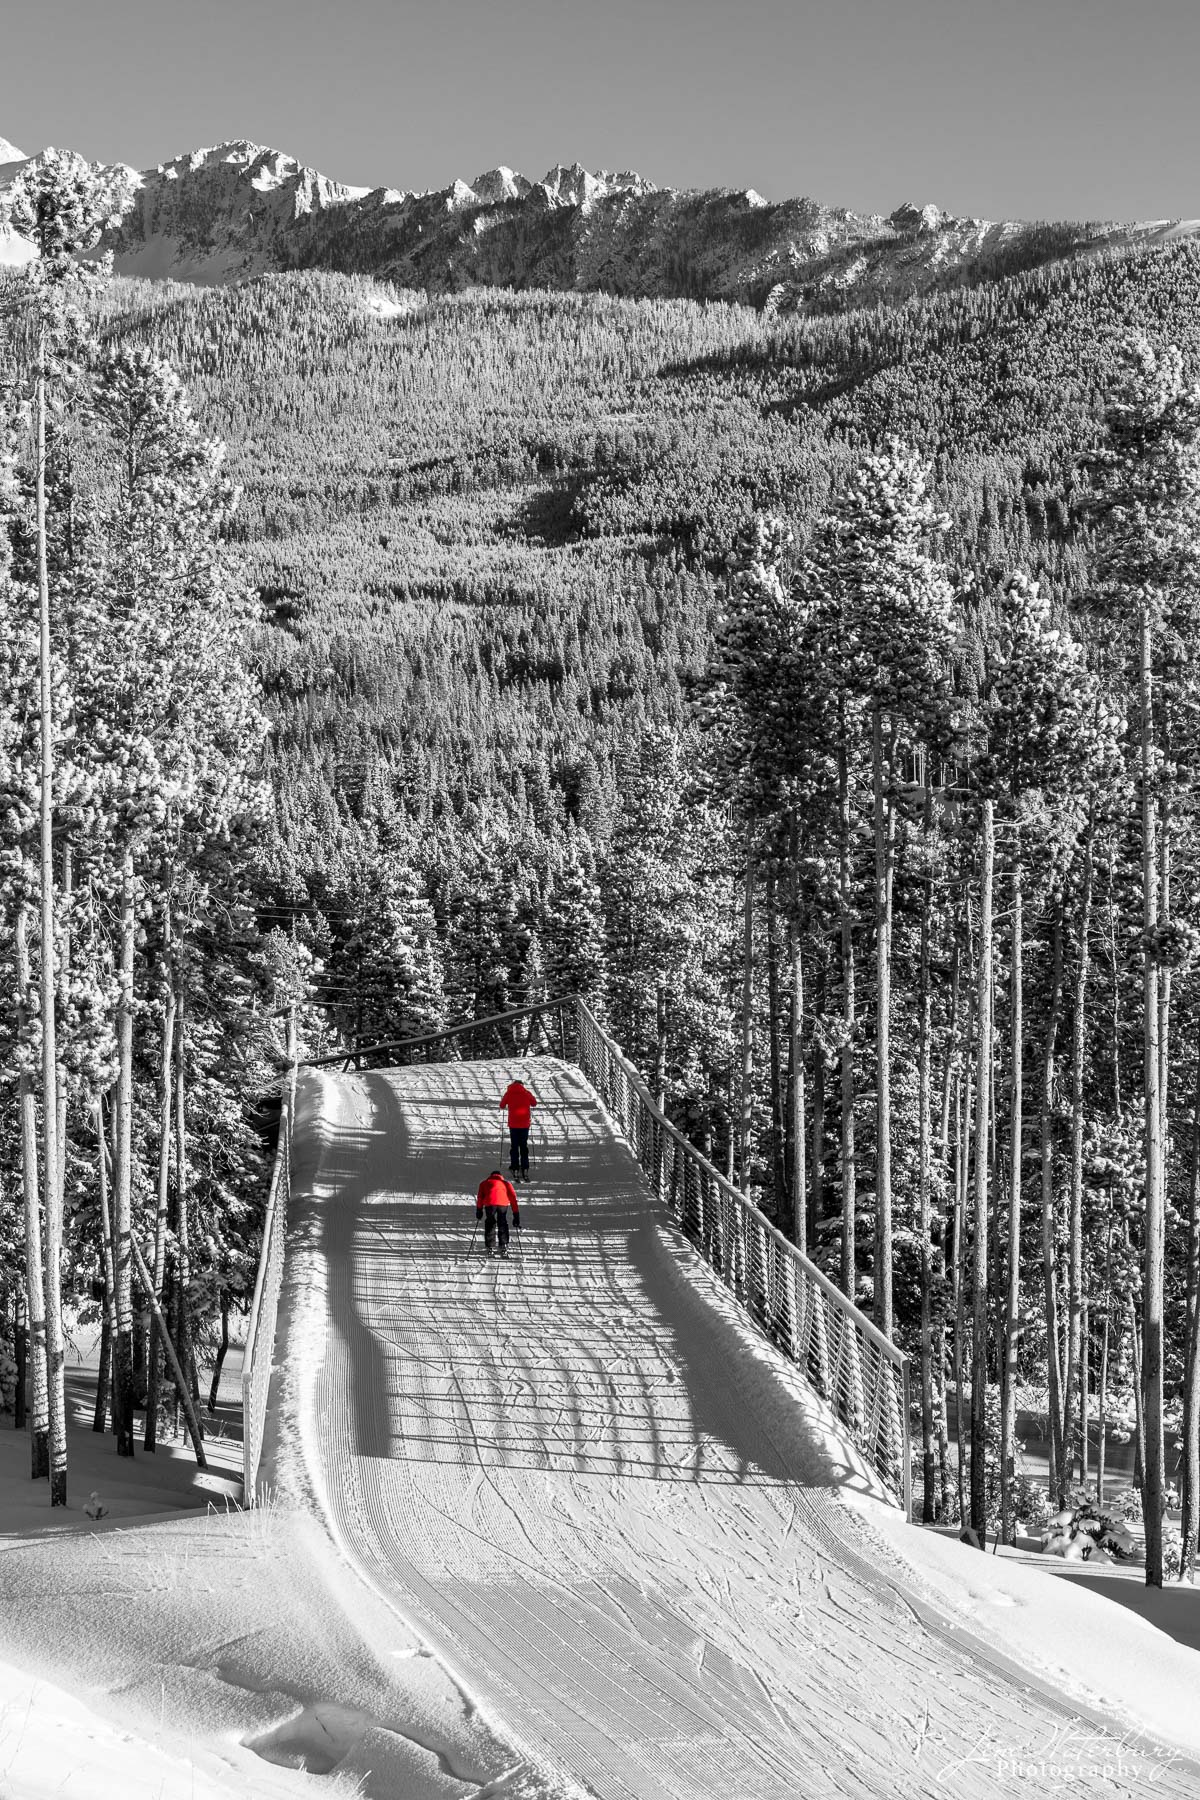 Two skiers cross a bridge to link up with the main runs at Big Sky ski resort, Big Sky, Montana.